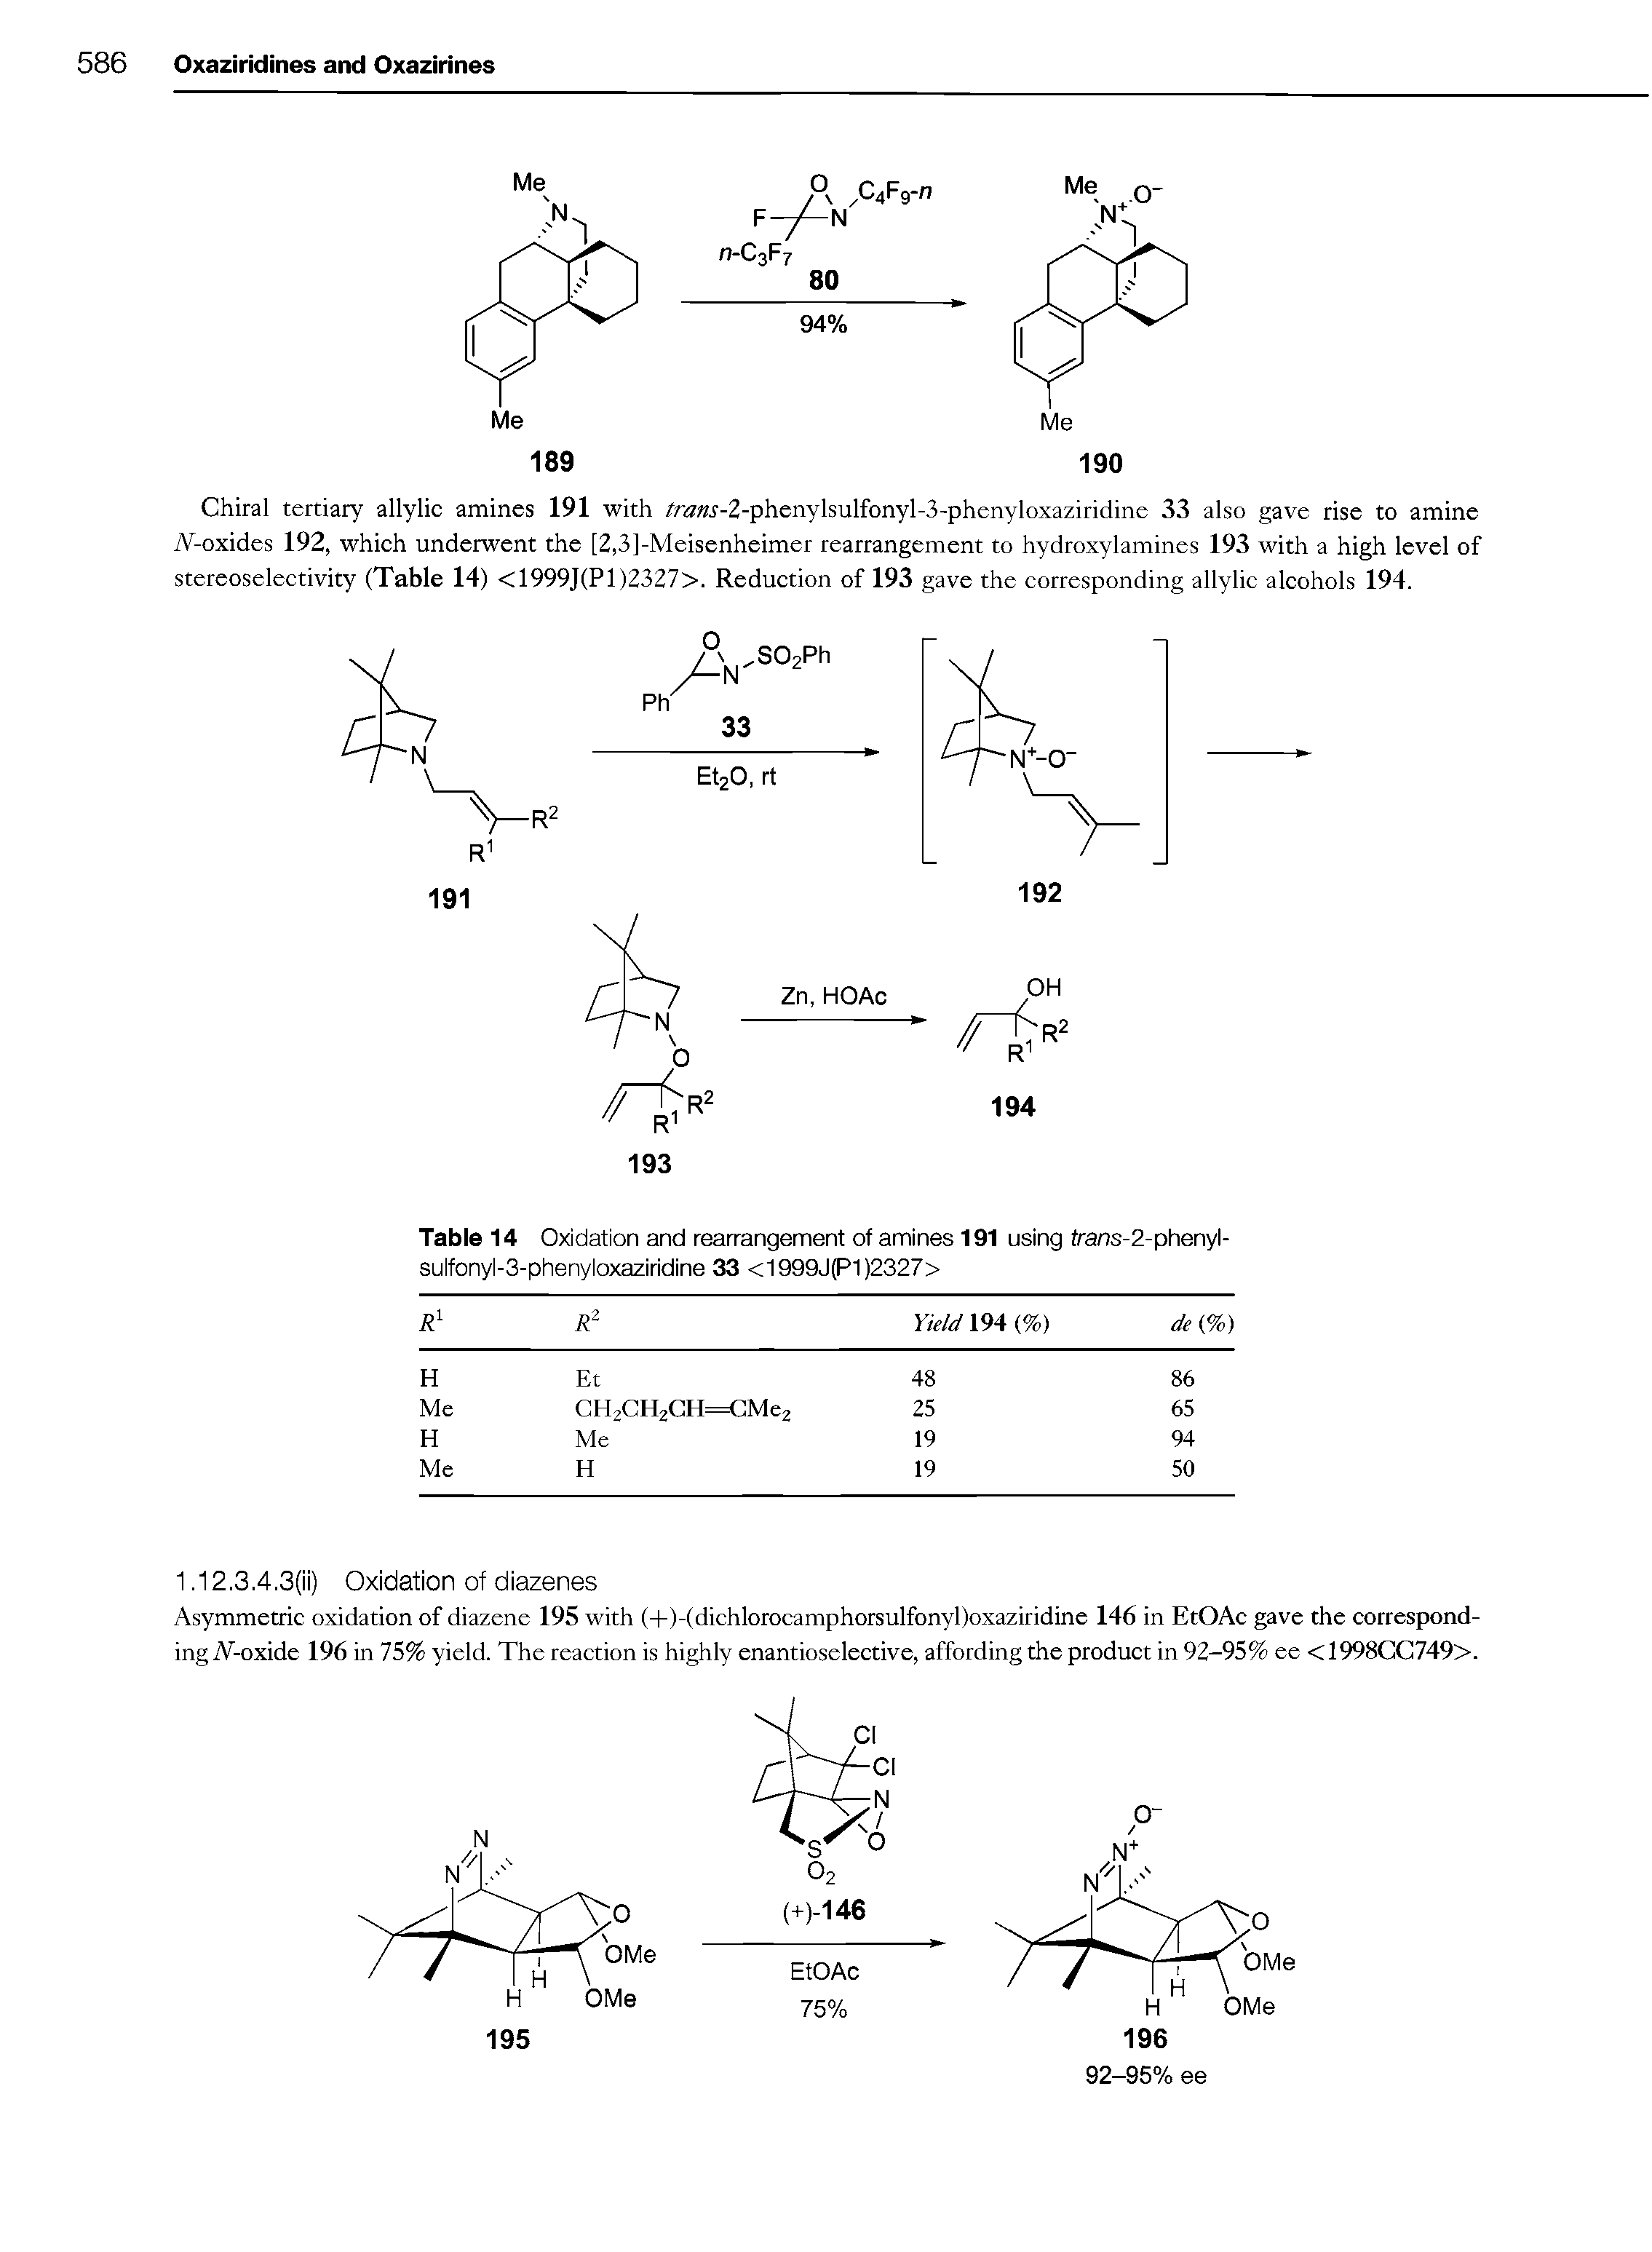 Table 14 Oxidation and rearrangement of amines 191 using frar)s-2-phenyi-suifonyi-3-phenyioxaziridine 33 <1999J(P1)2327>...